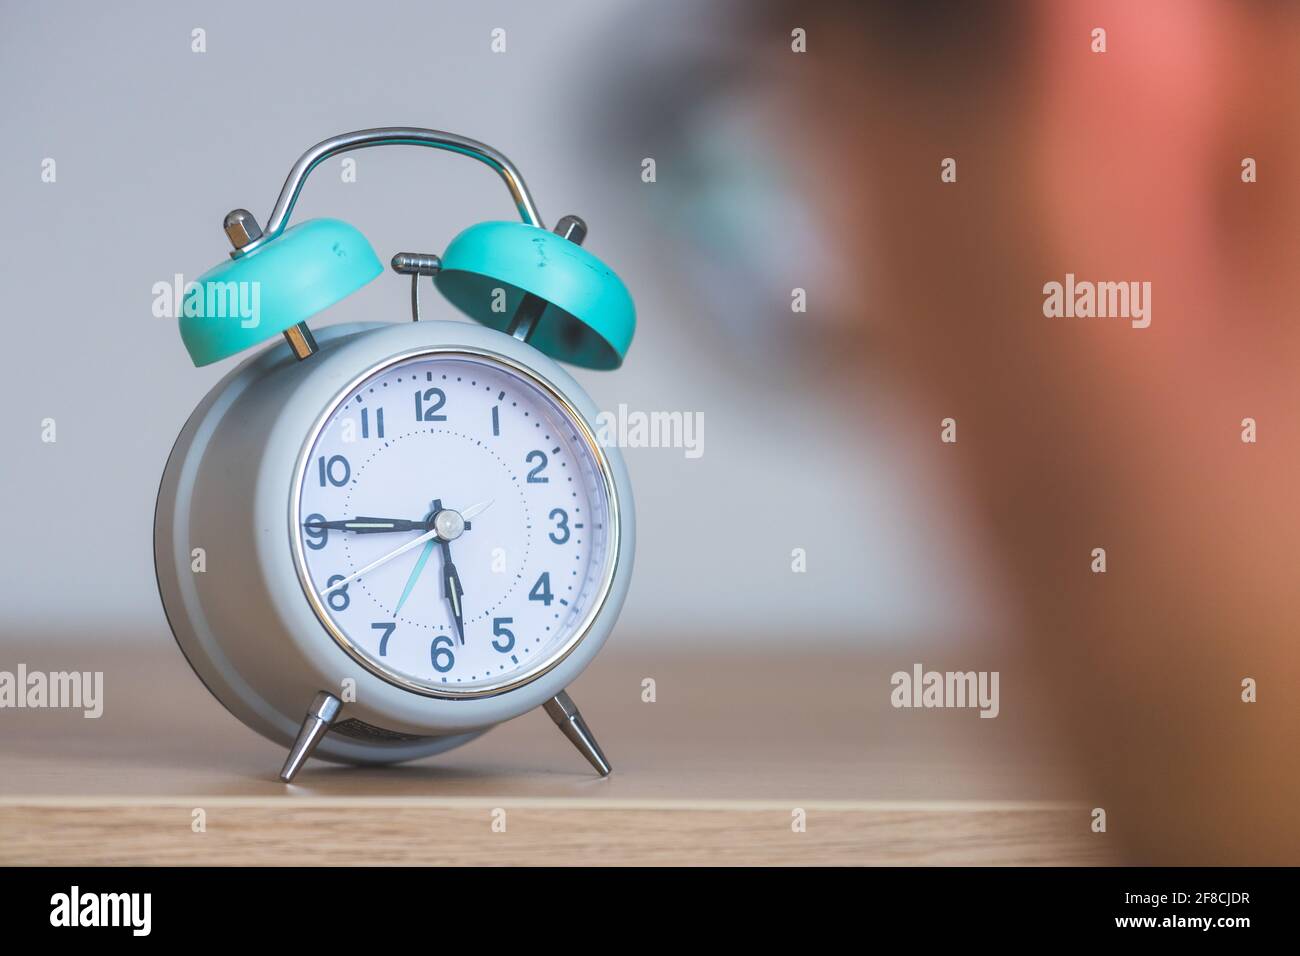 Retro styled white alarm clock Stock Photo